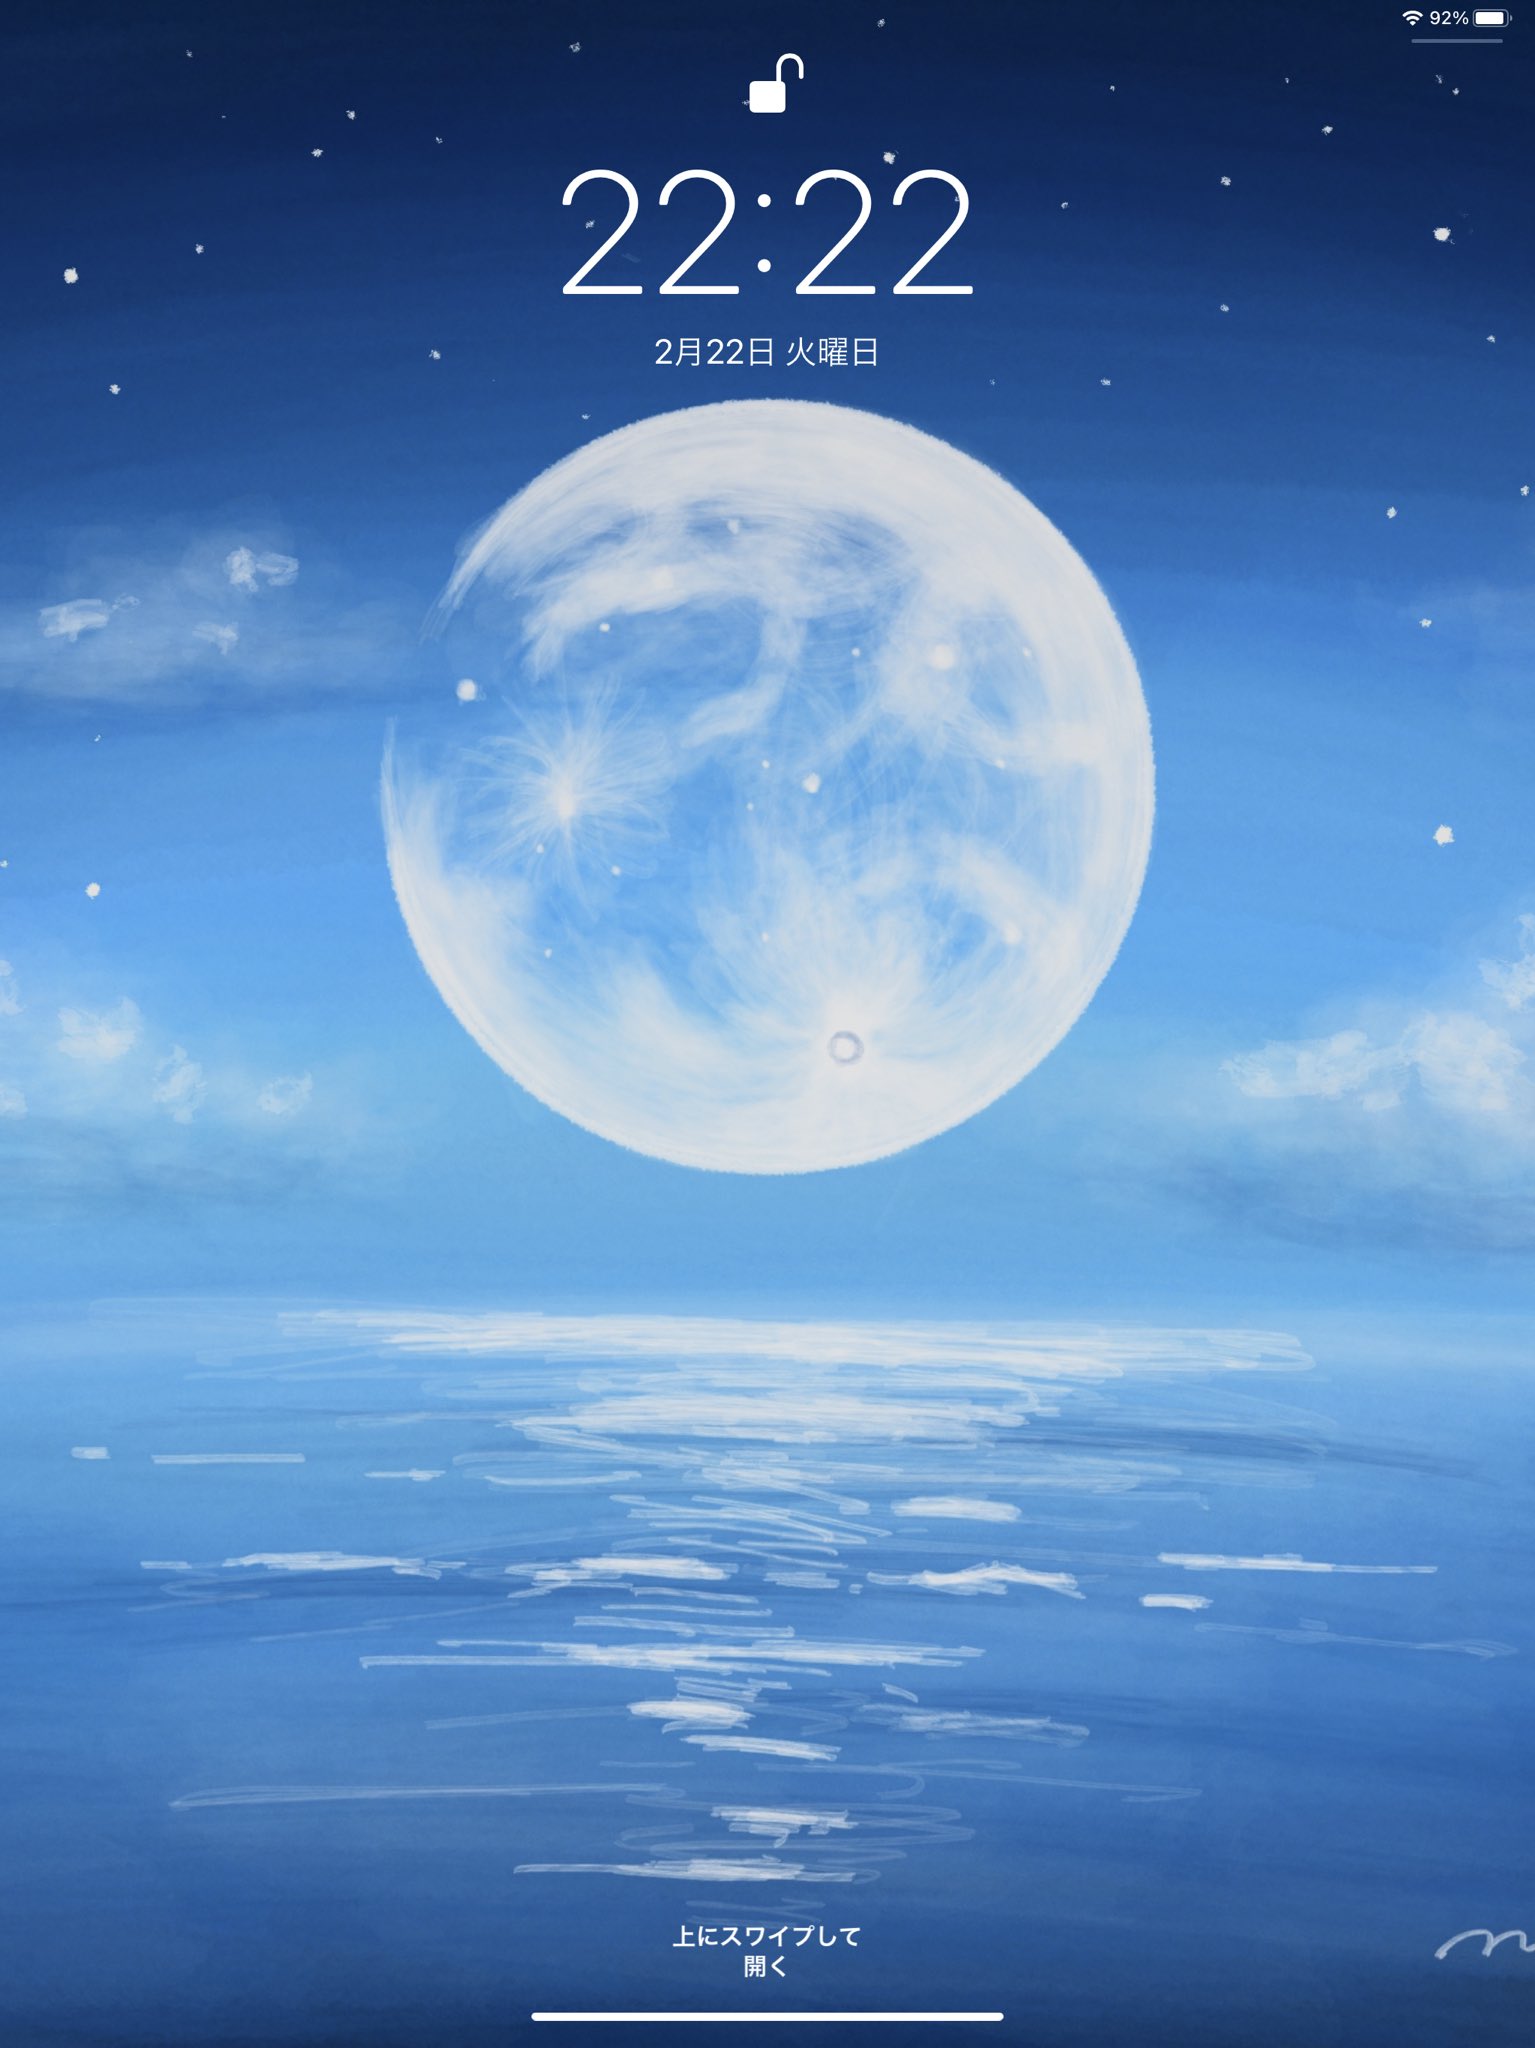 Nalu 月が綺麗ですね イラスト 月 満月 22年2月22日22時22分 T Co T0zybghnbj Twitter